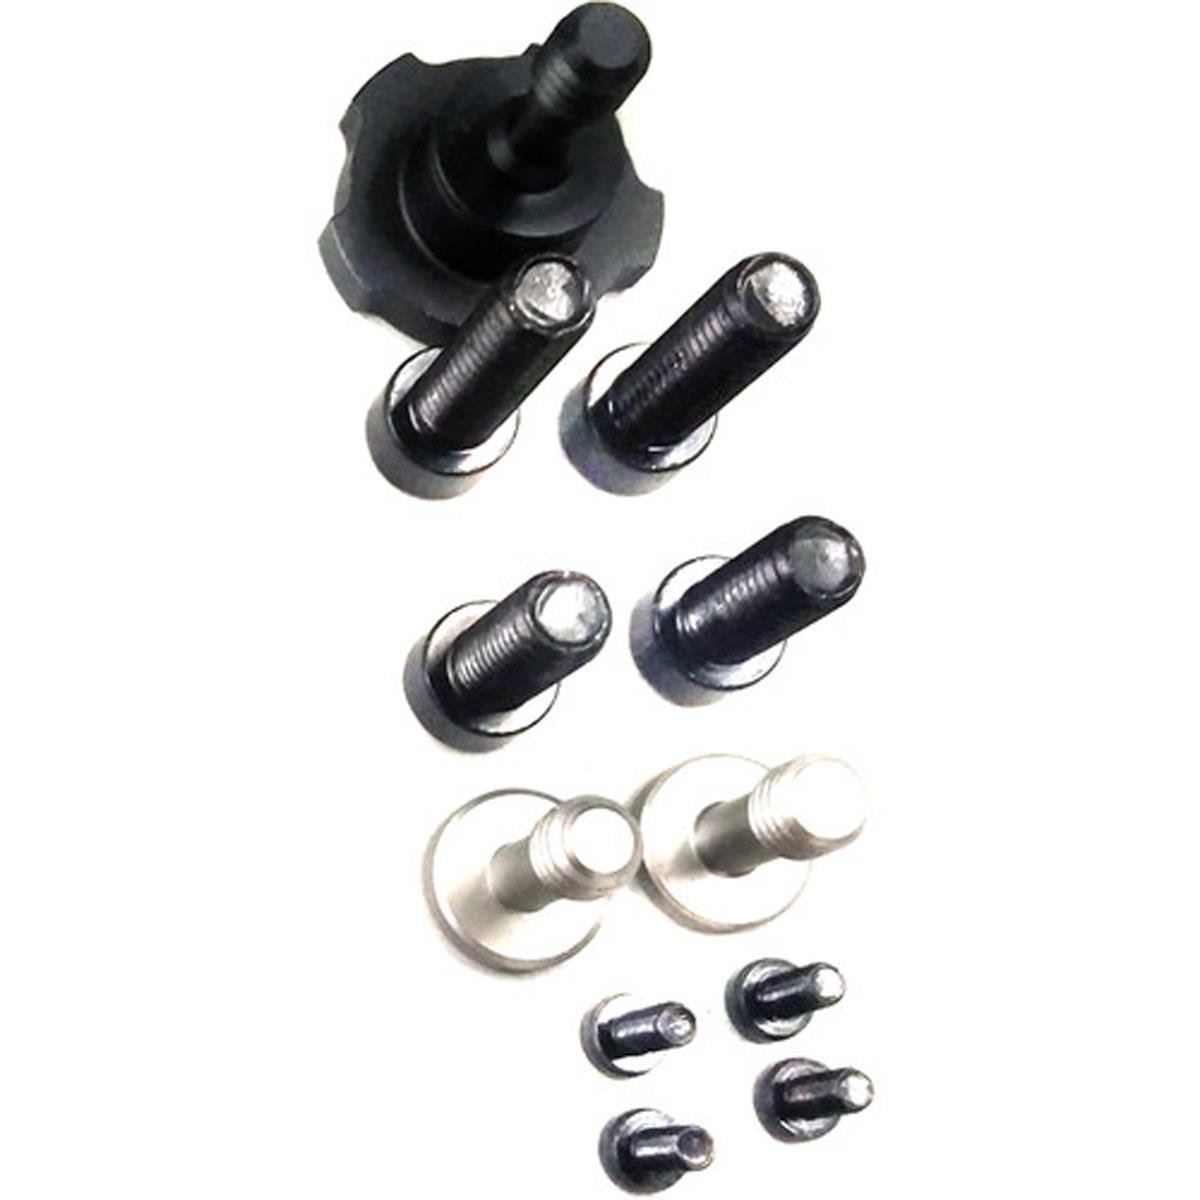 Image of Blackmagic Design Replacement Bolts for URSA Mini Shoulder Kit